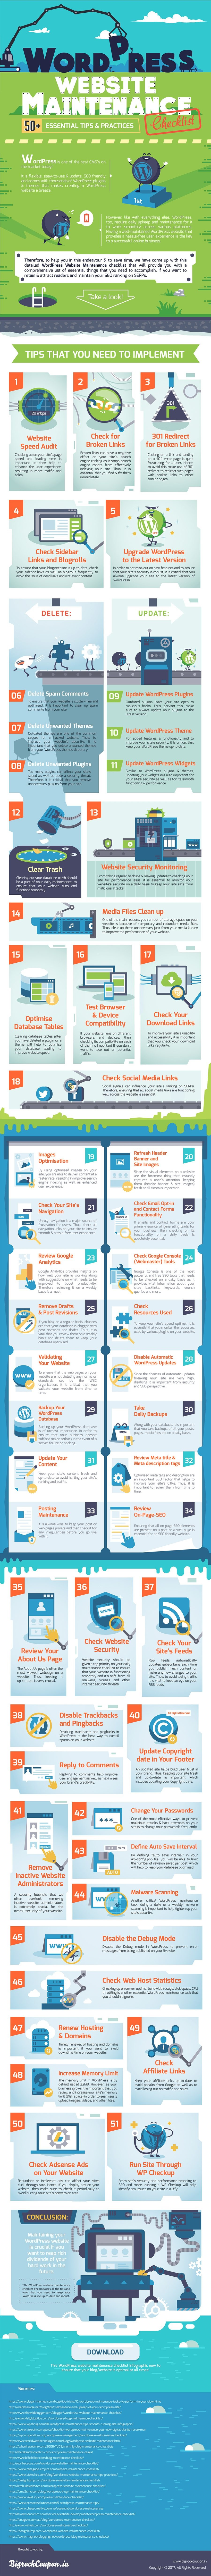 WordPress Website Maintenance Checklist 50+ Essential Tips & Practices - #Infographic